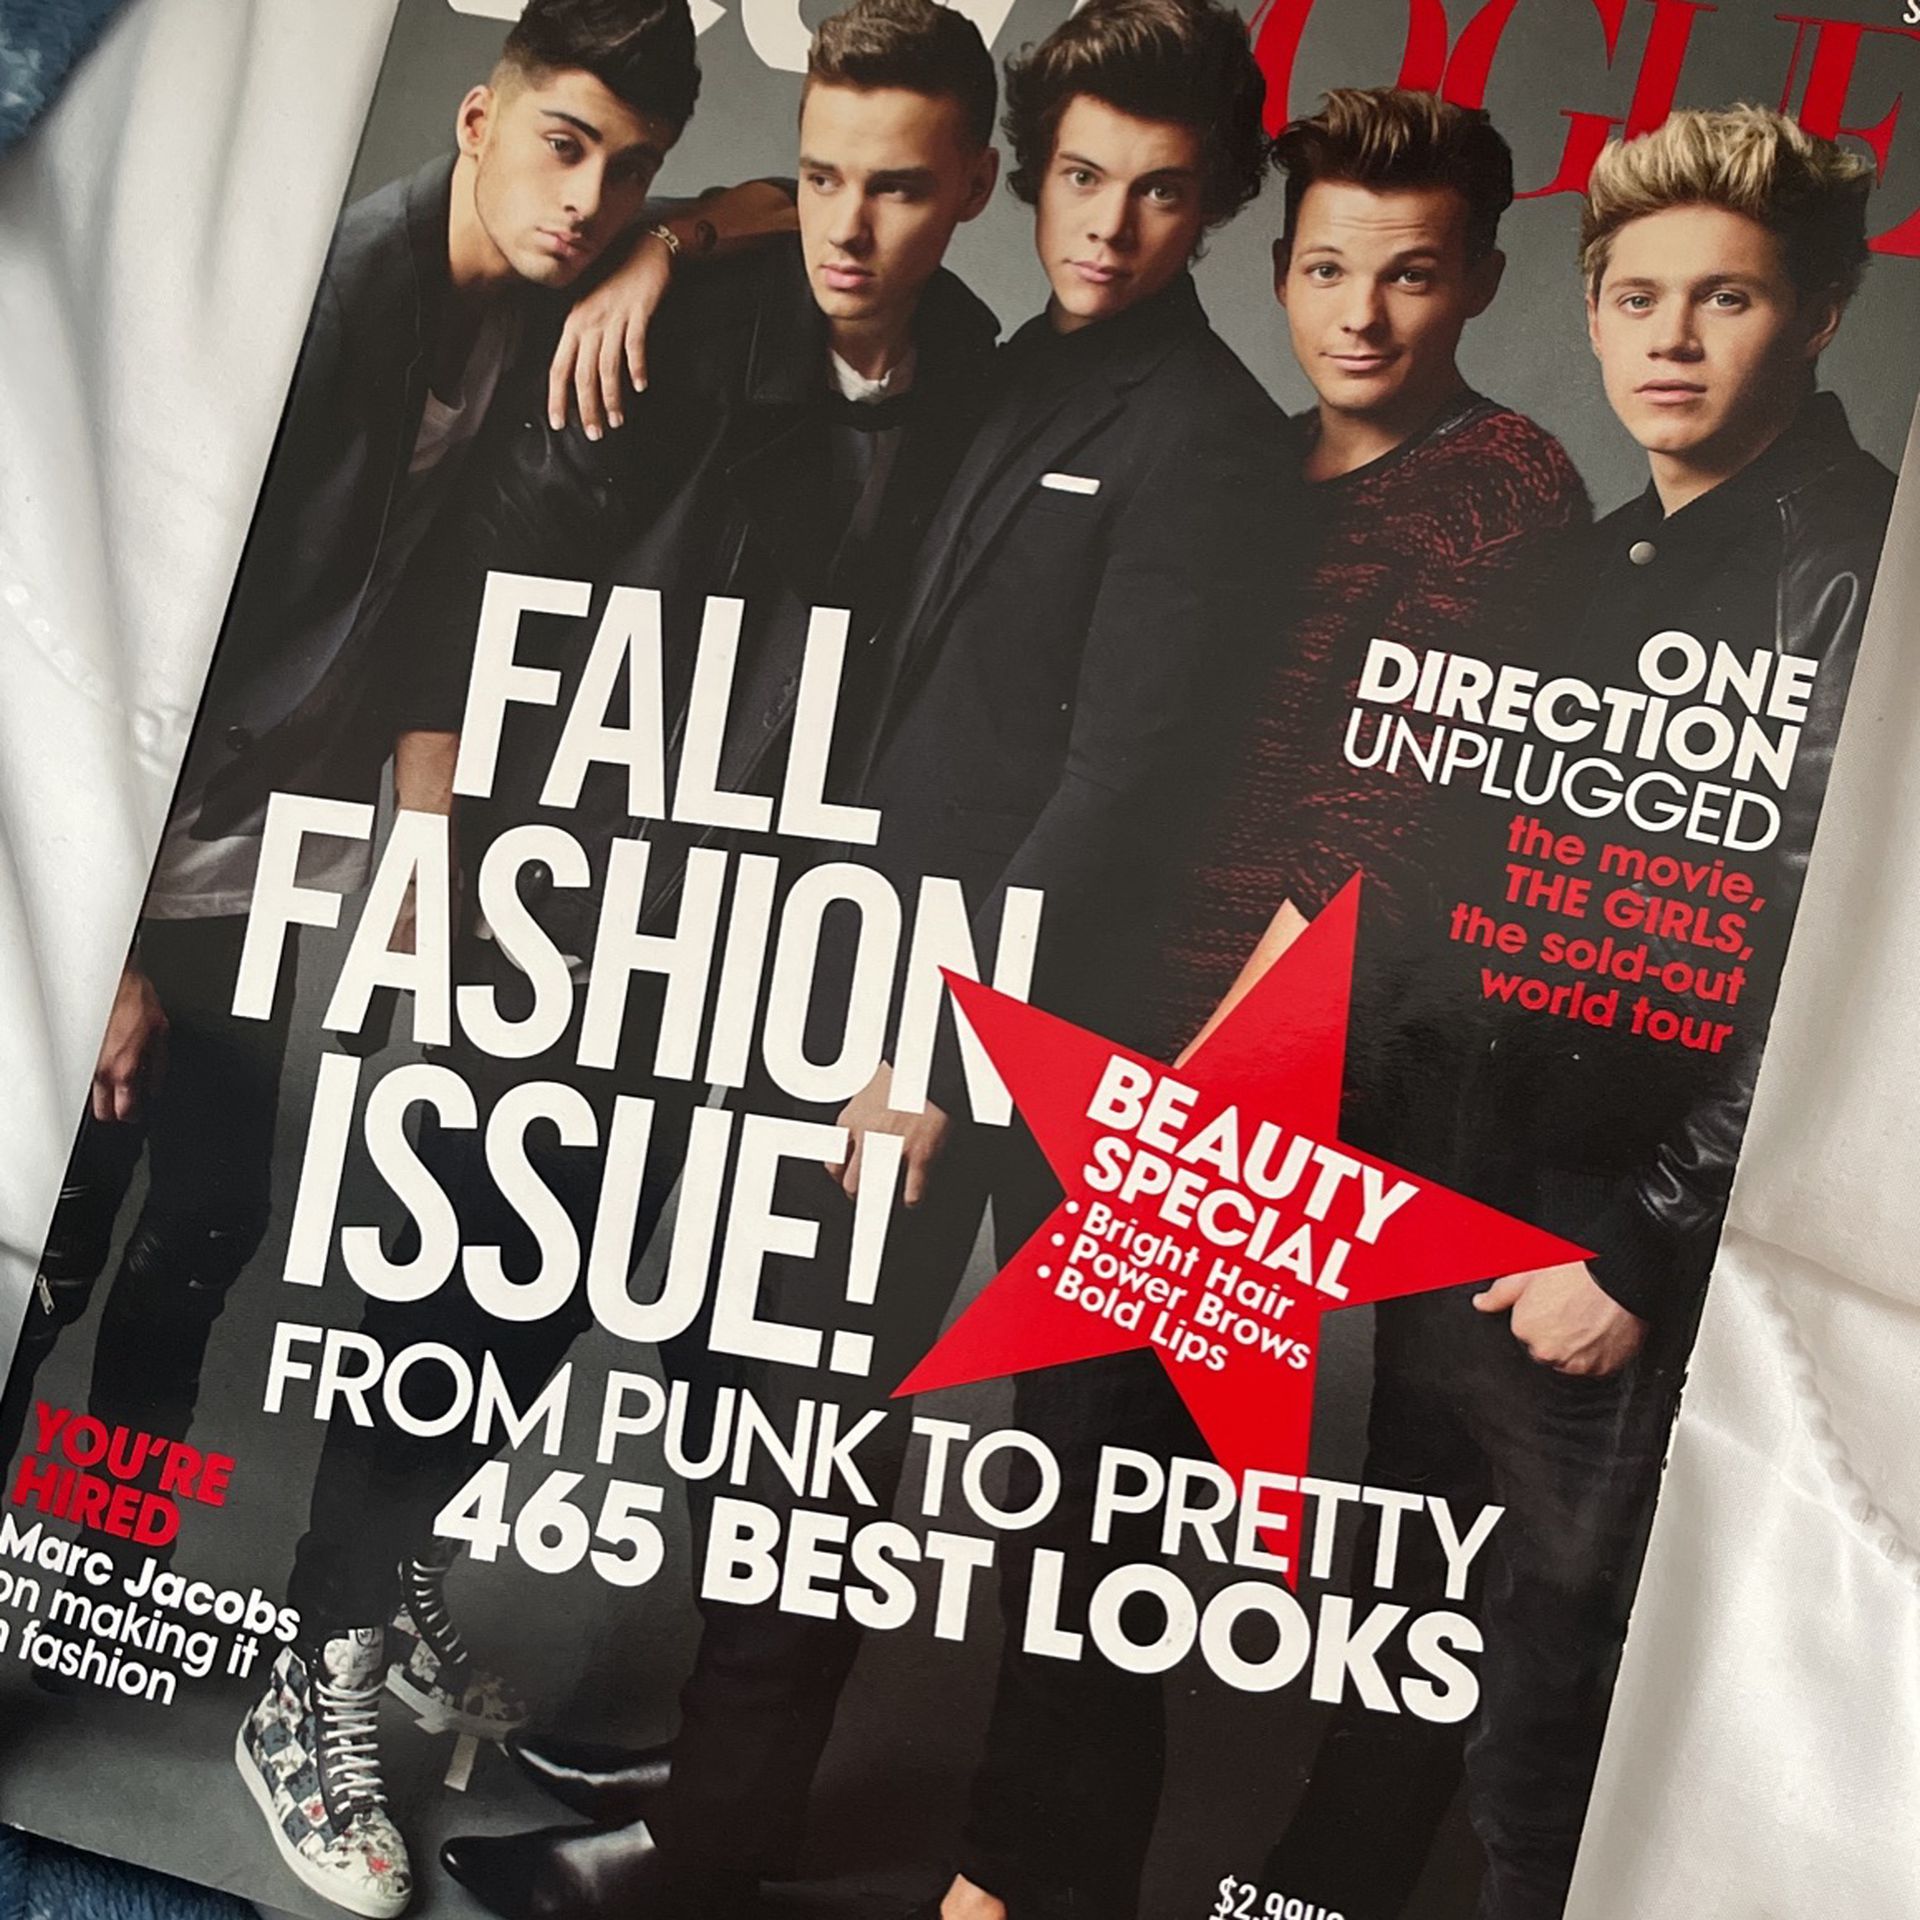 One Direction Magazine TeenVogue